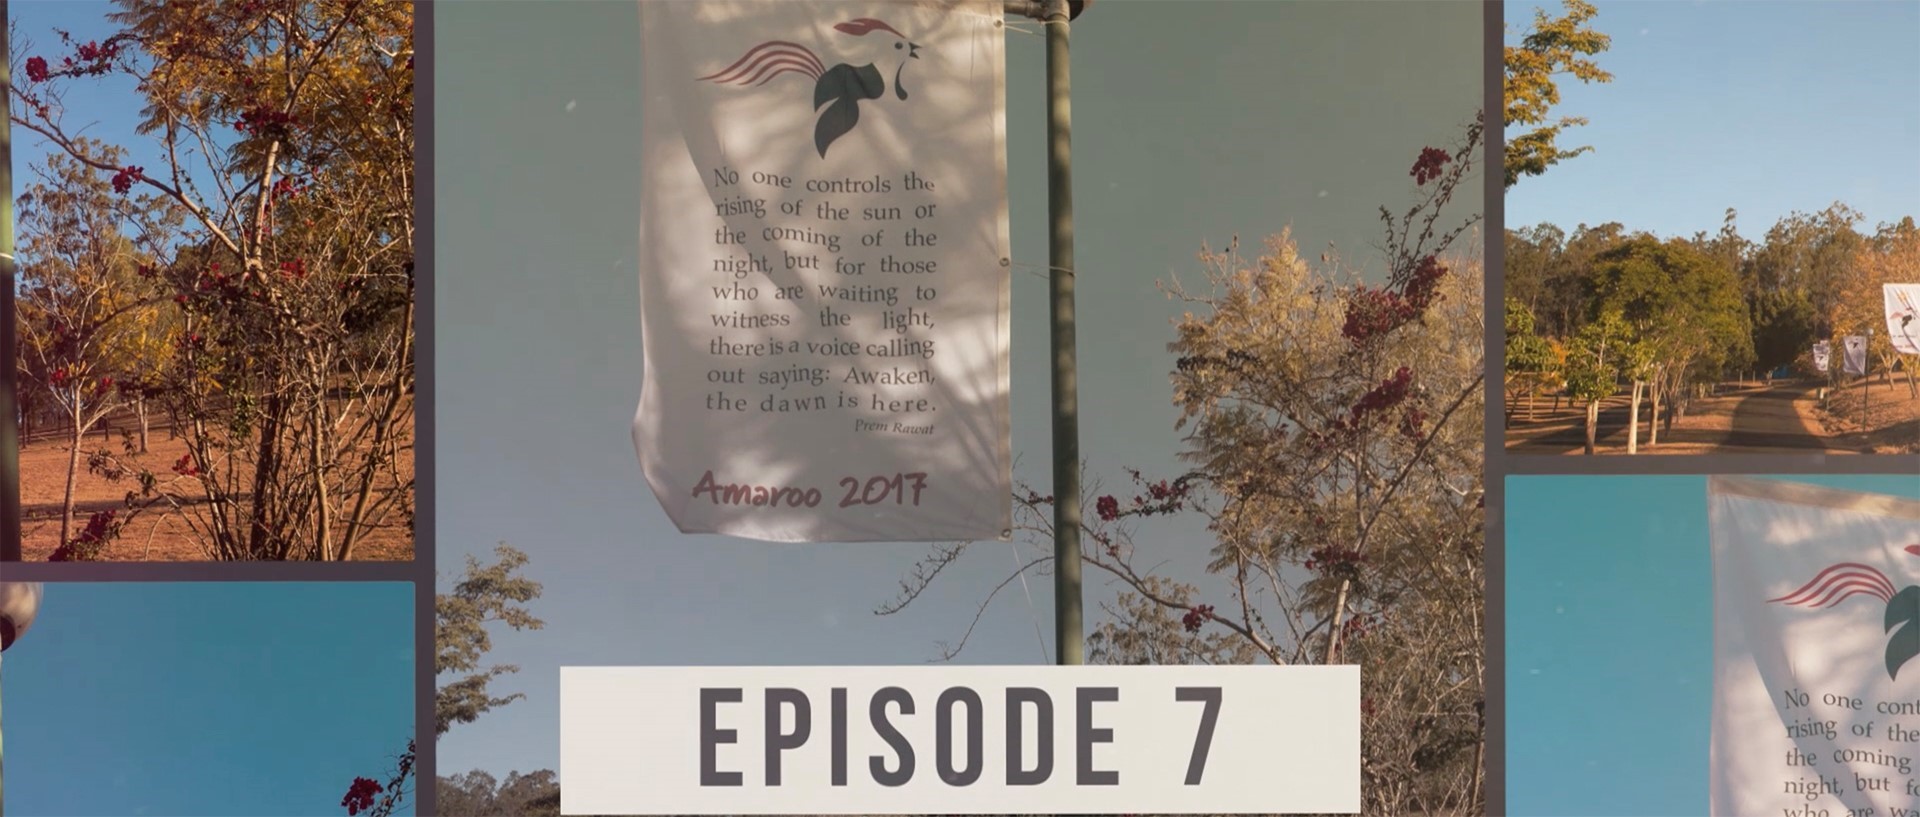 Amaroo 2017 Series Episode 7 Video